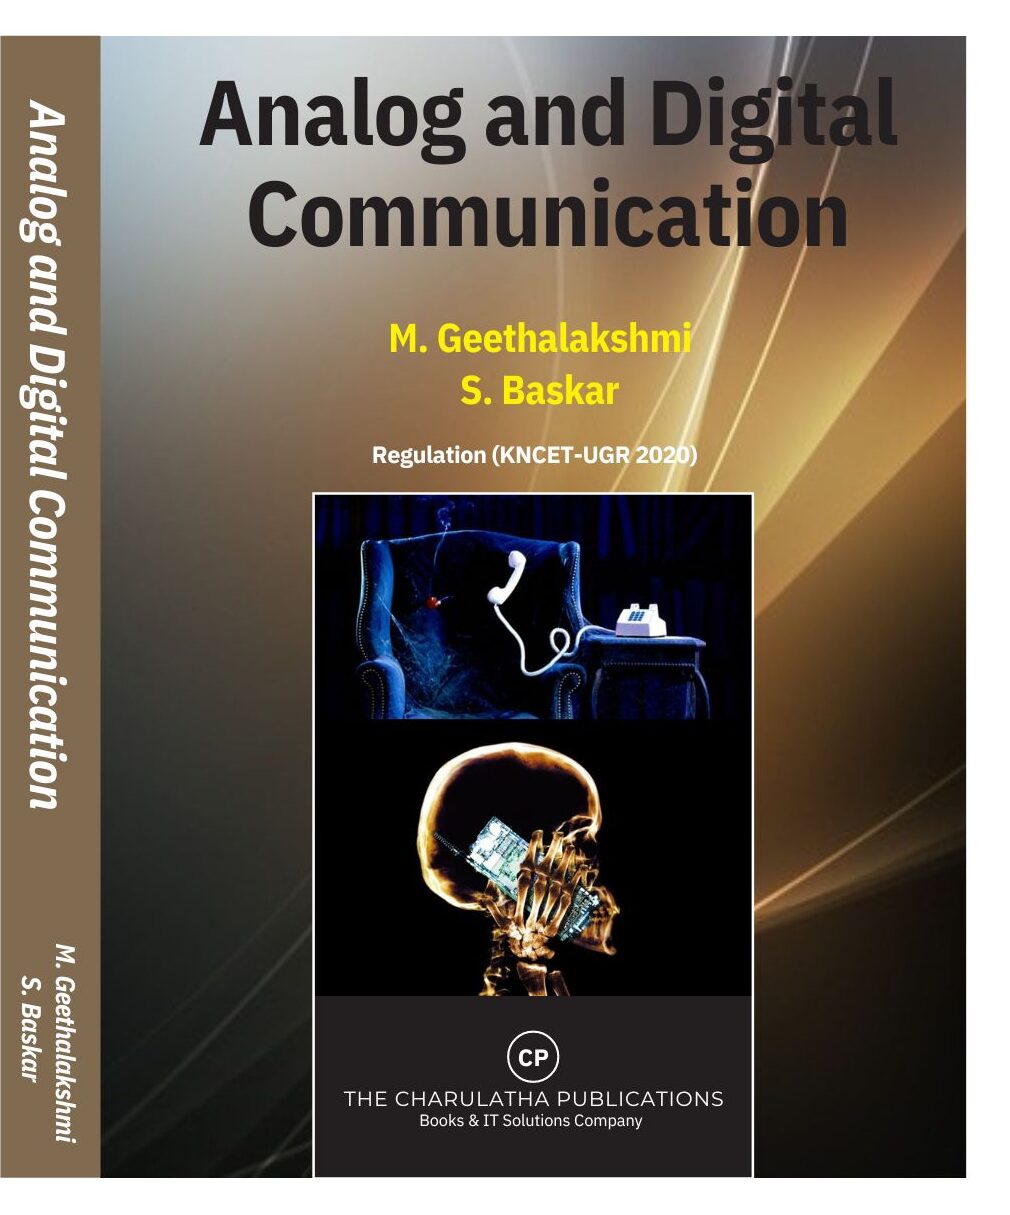 The charulatha publications Analog and digital communication